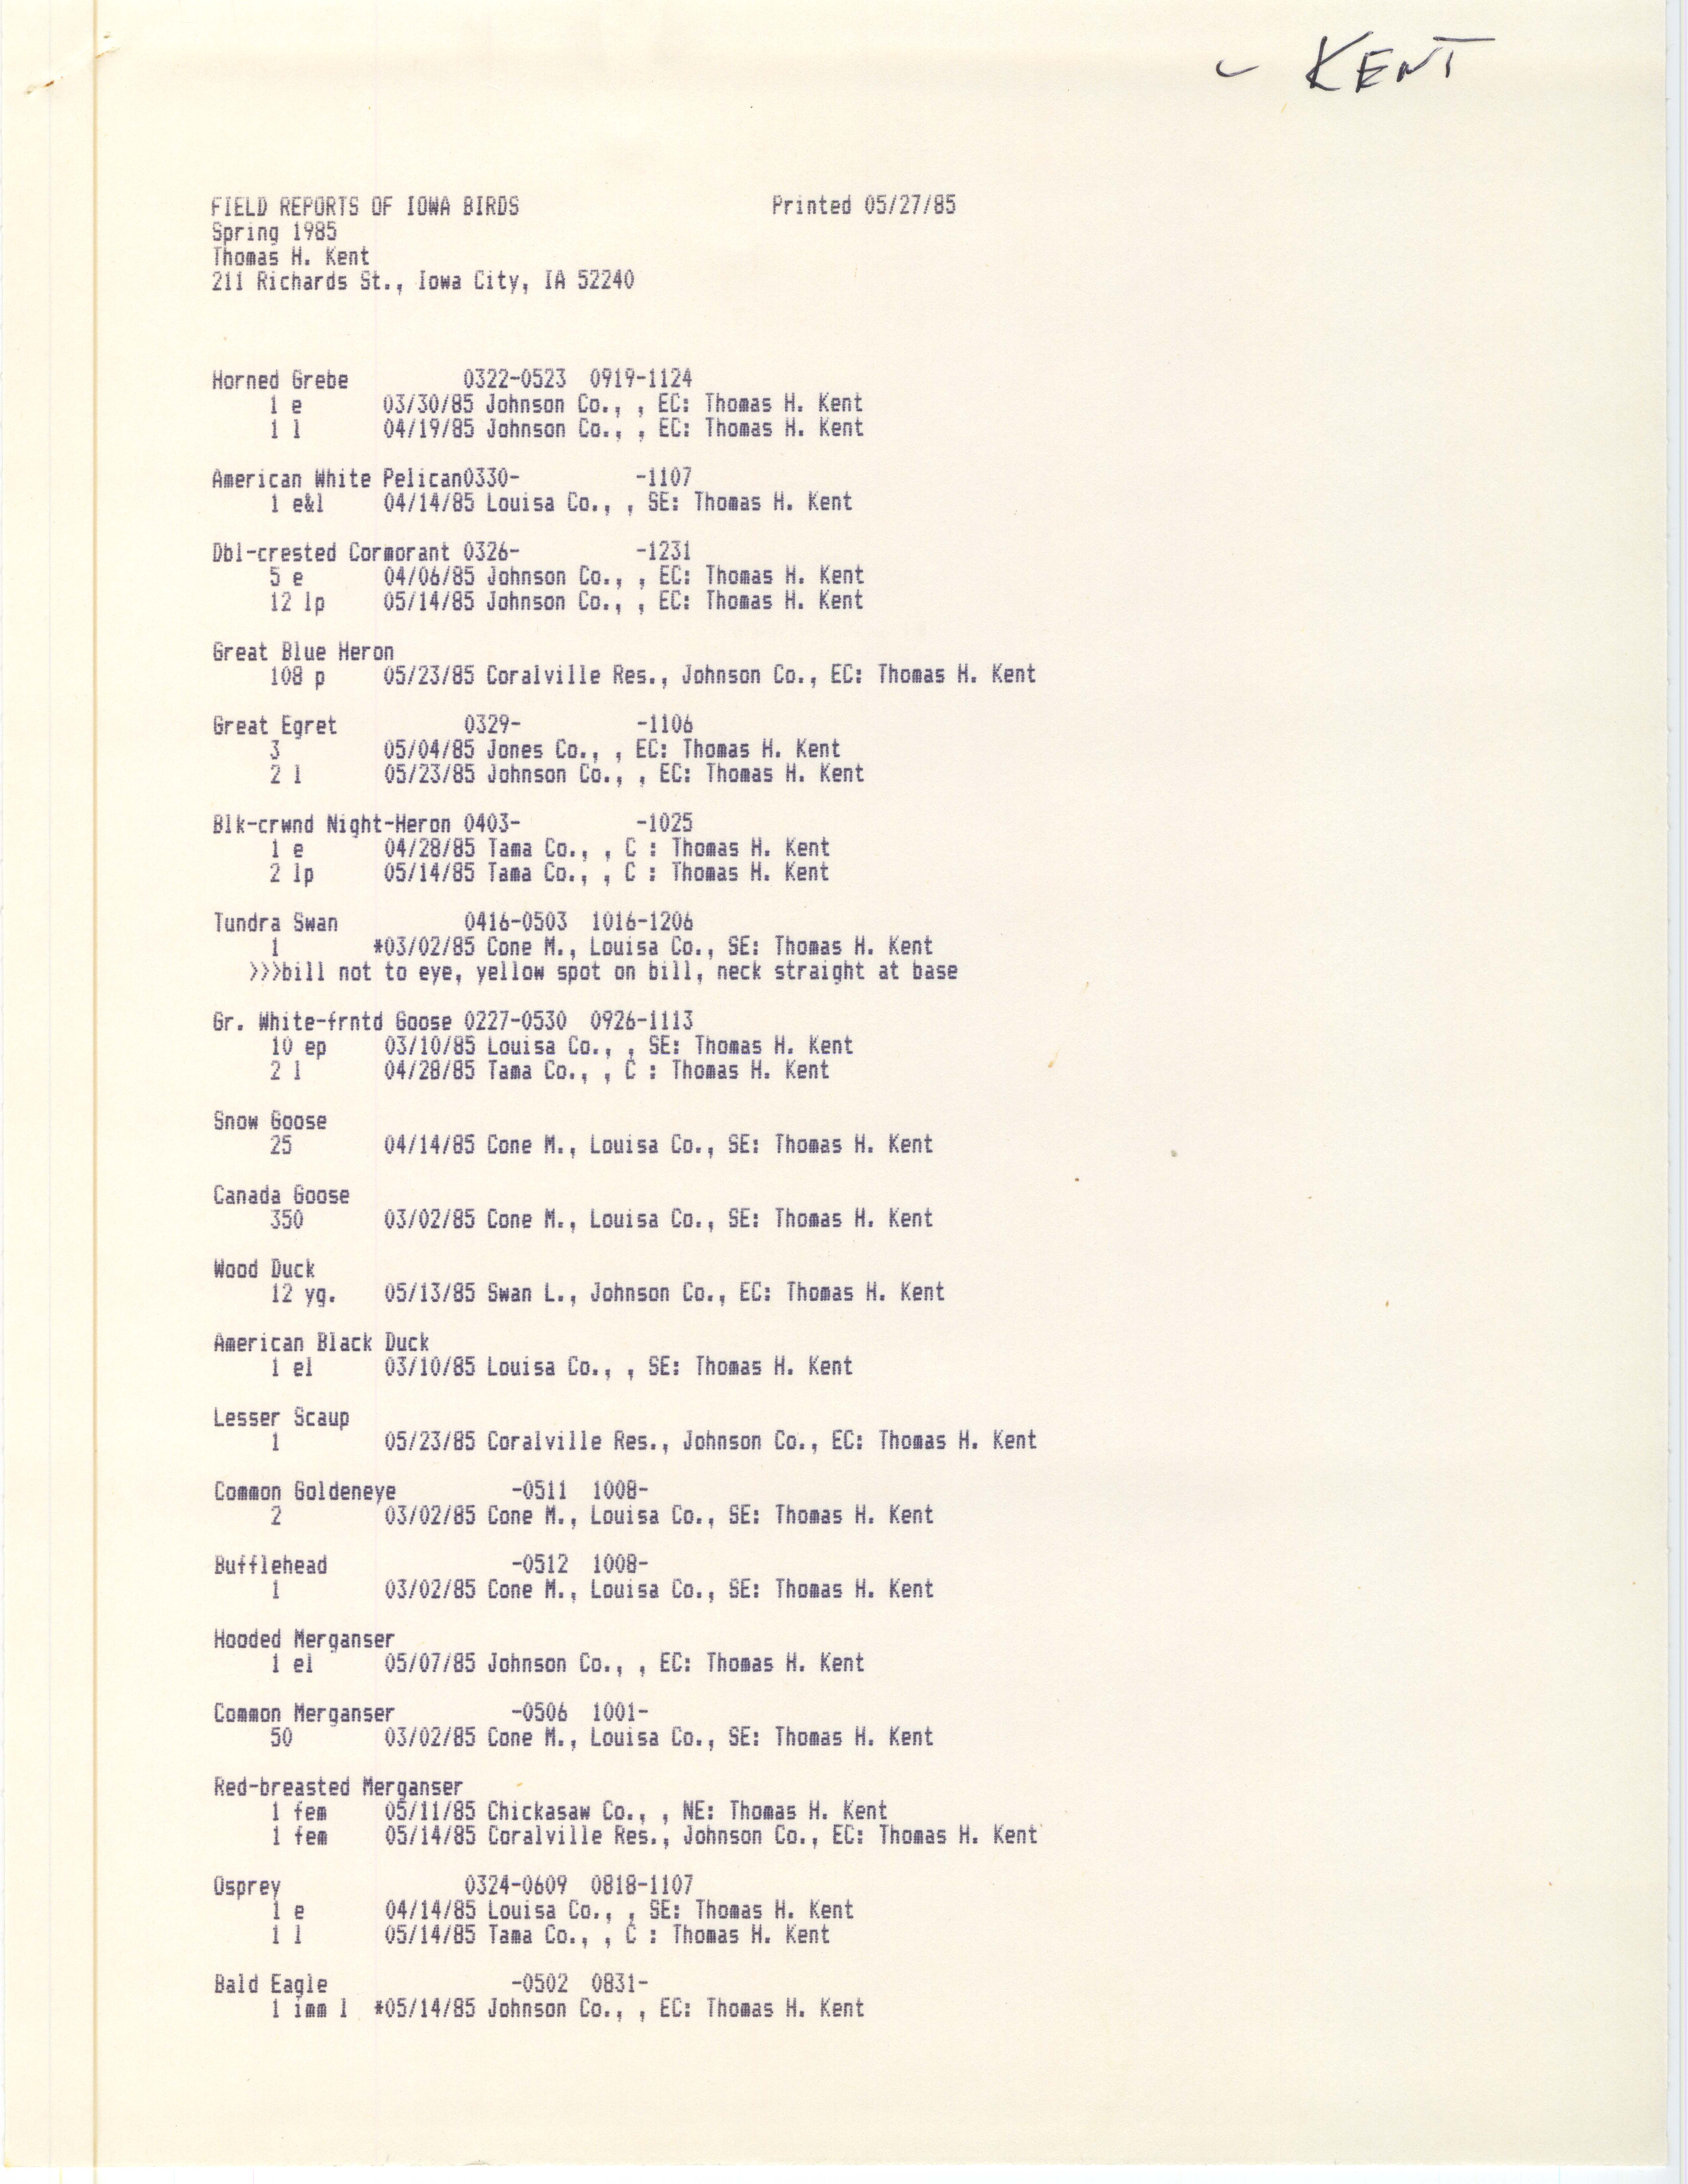 Field report of Iowa birds, May 27, 1985